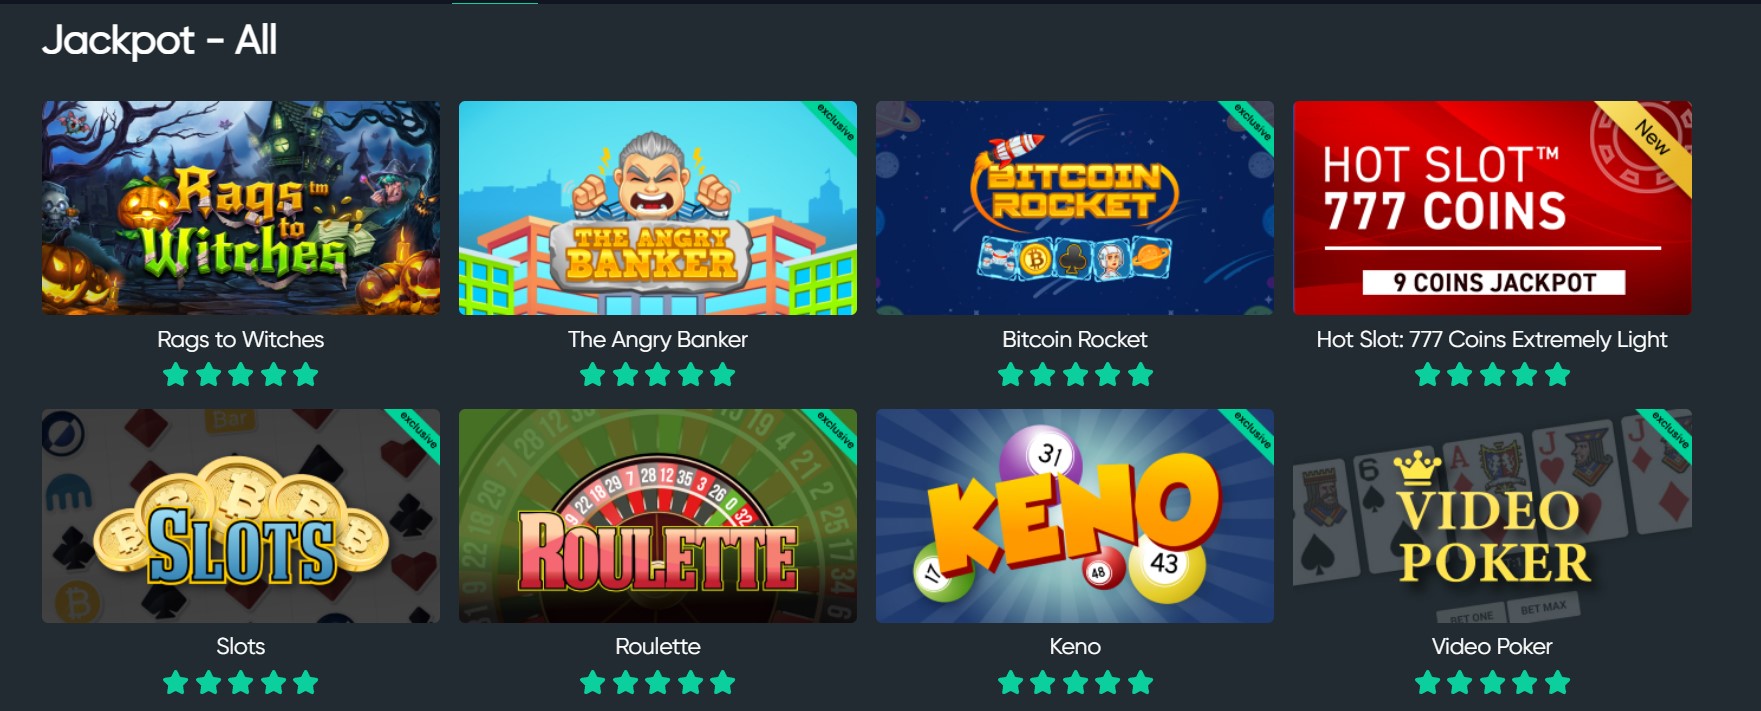 jeux jackpot bitcoin.com